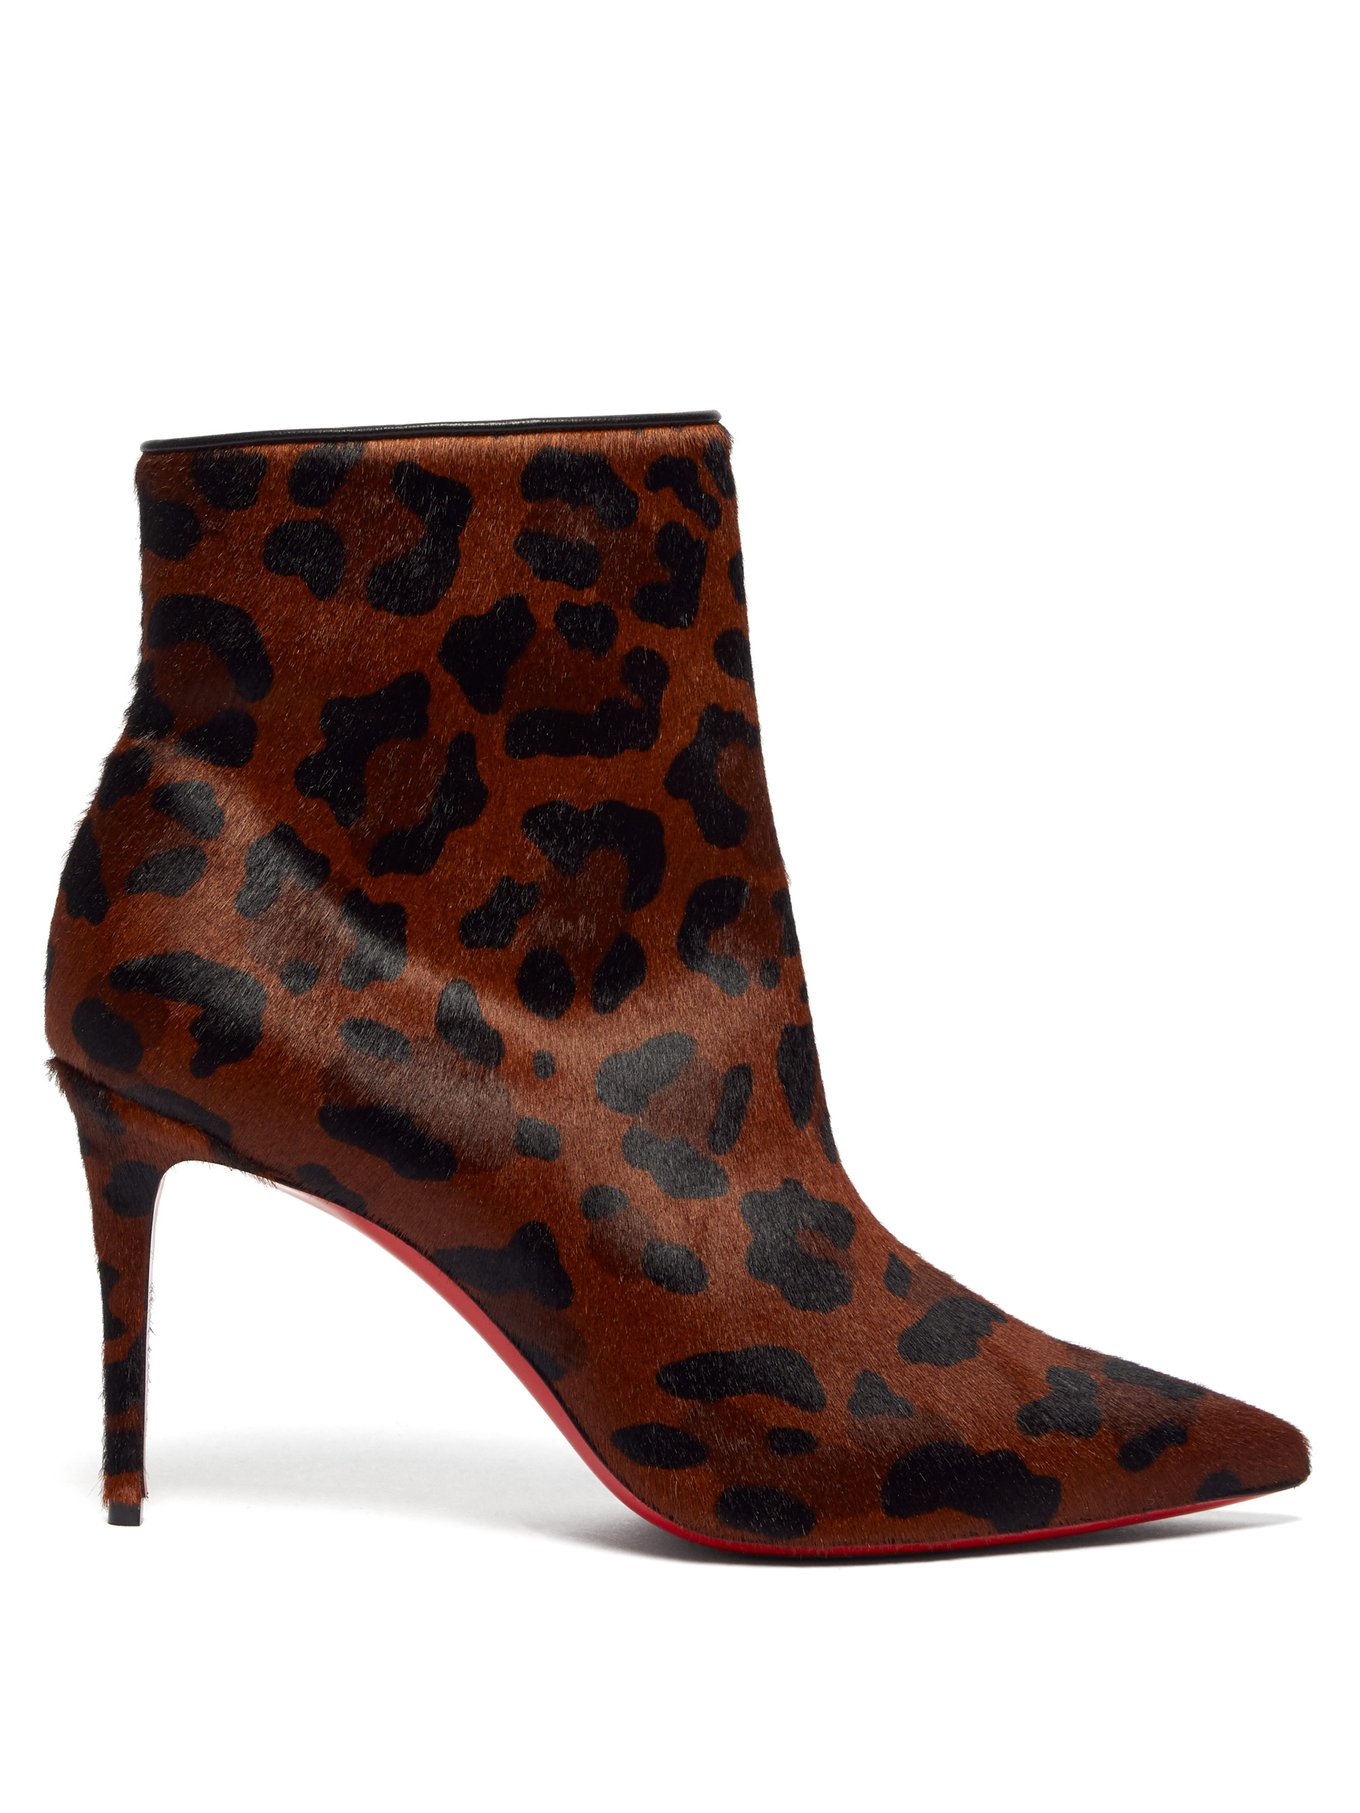 christian louboutin leopard boots